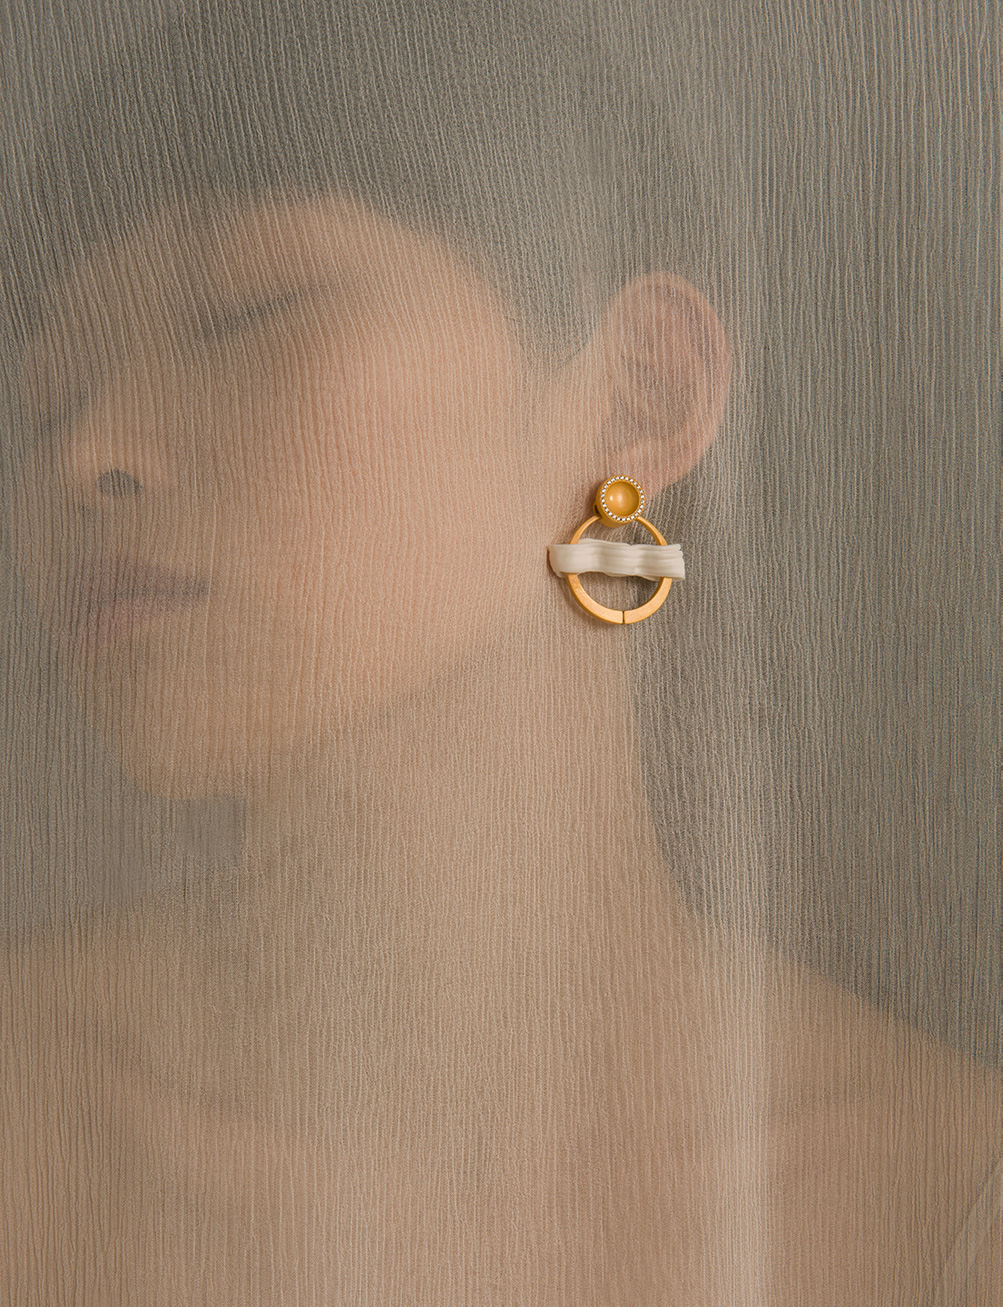 Photo of woman wearing earring.